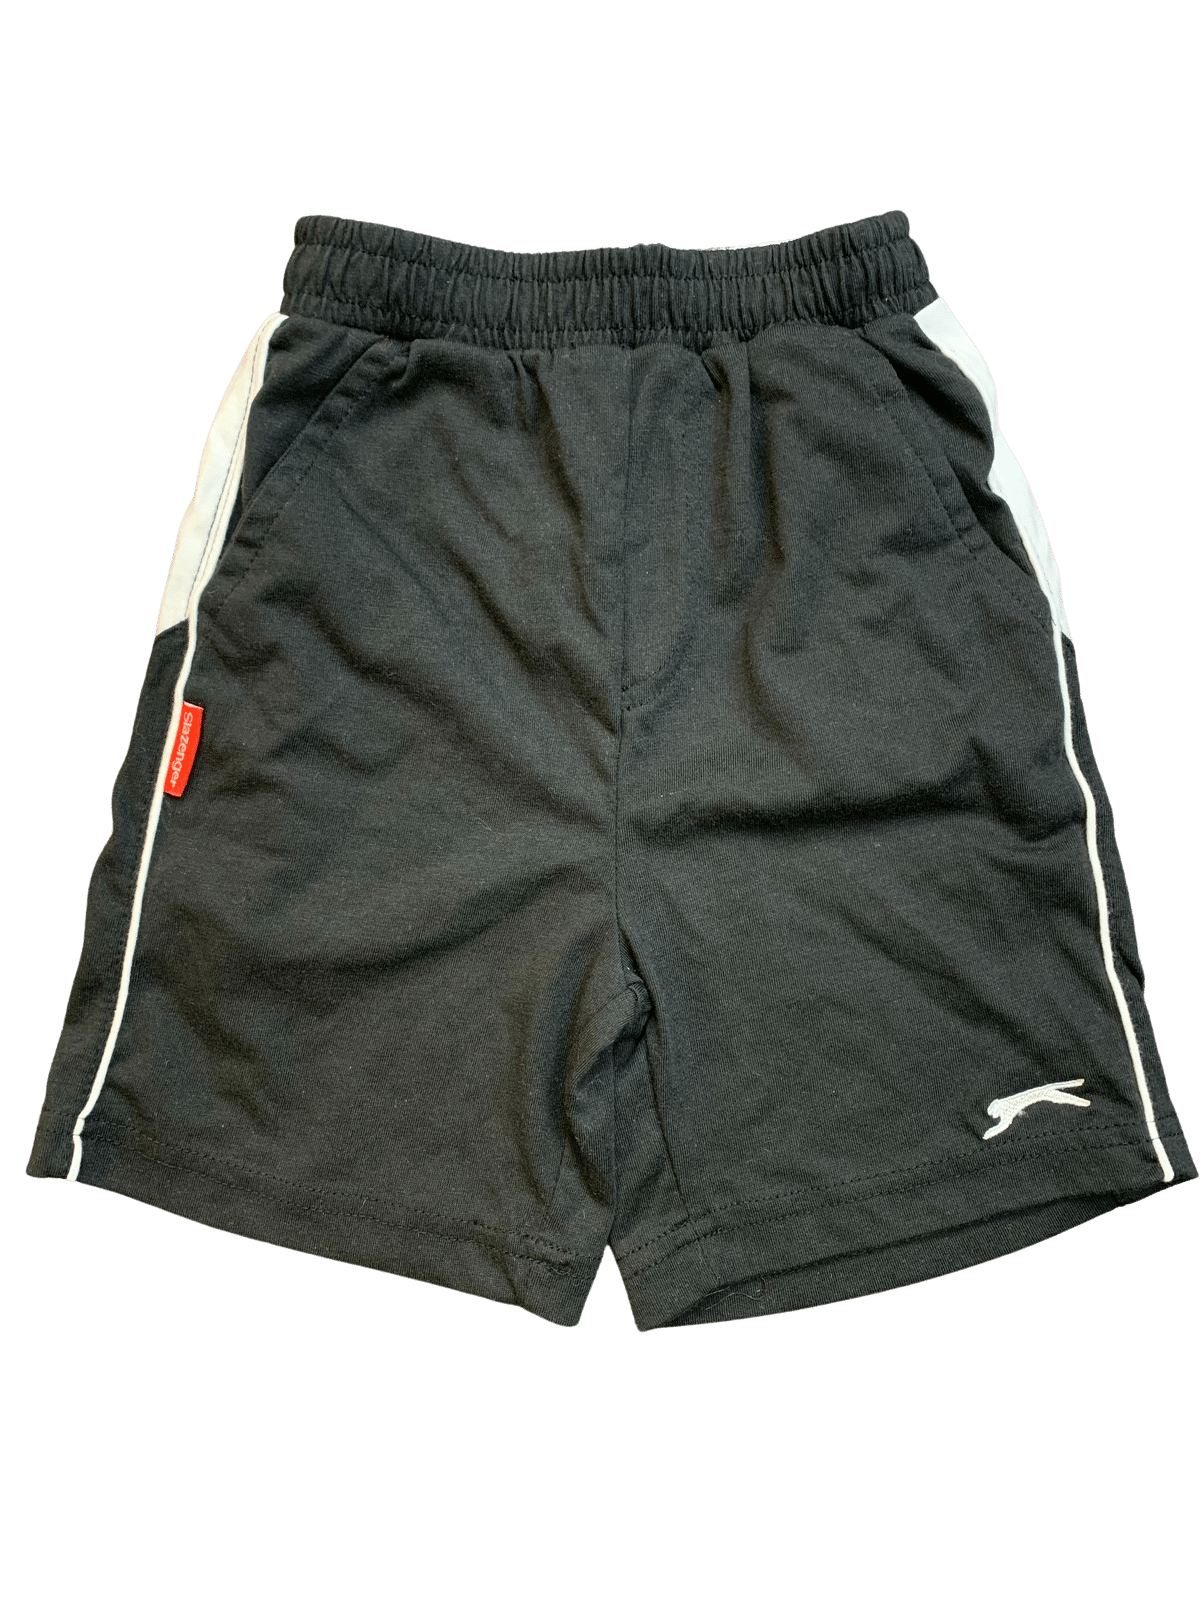 Slazanger Jersey Shorts Boys 7-8 Years